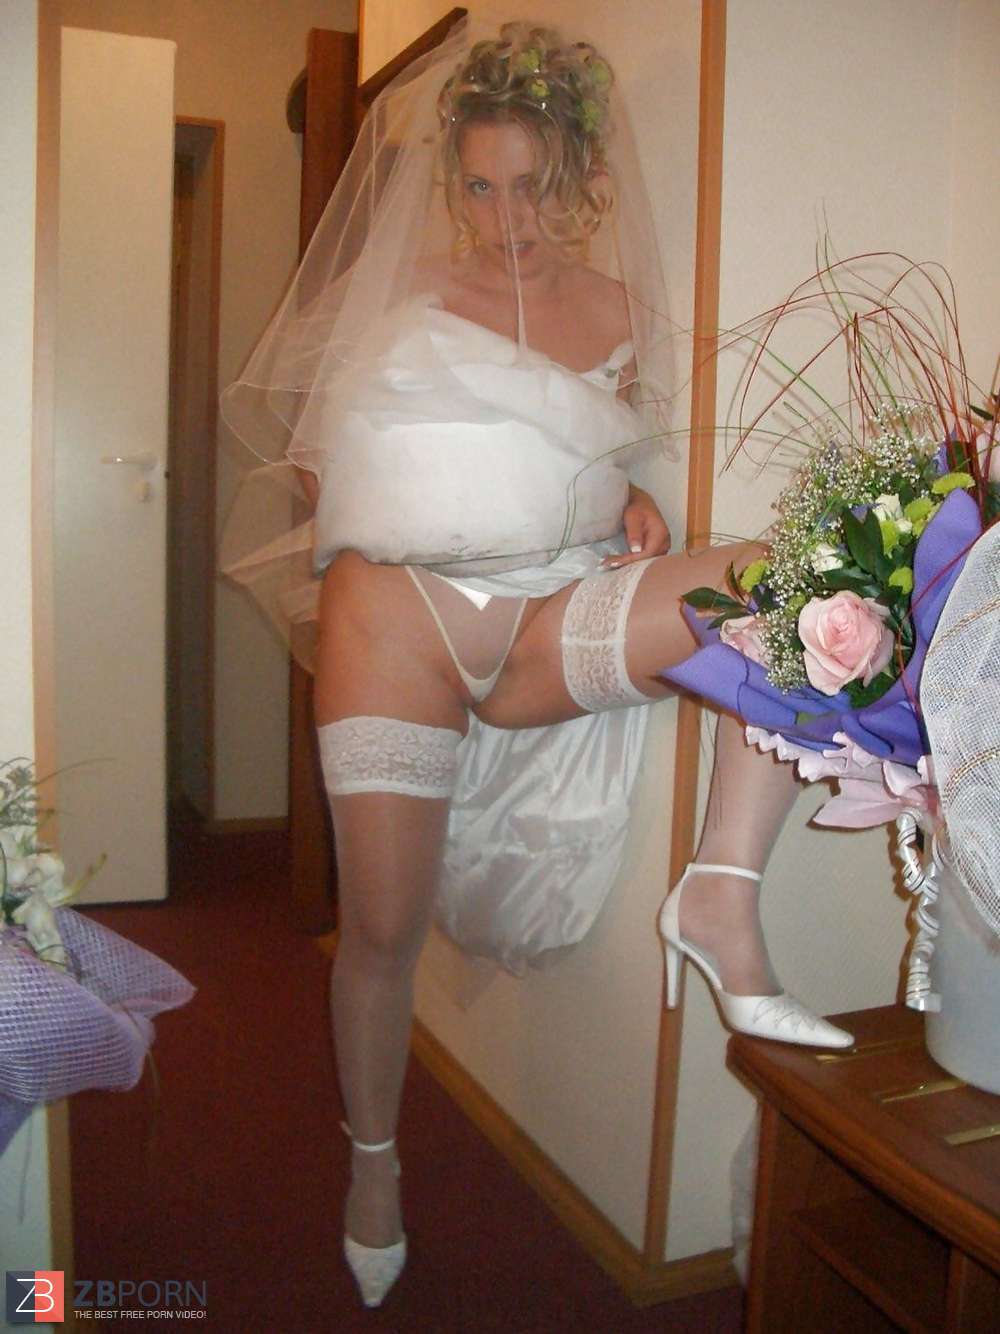 Brides Wedding Voyeur Upskirt White Undies And Hooter 0 Hot Sex Picture picture